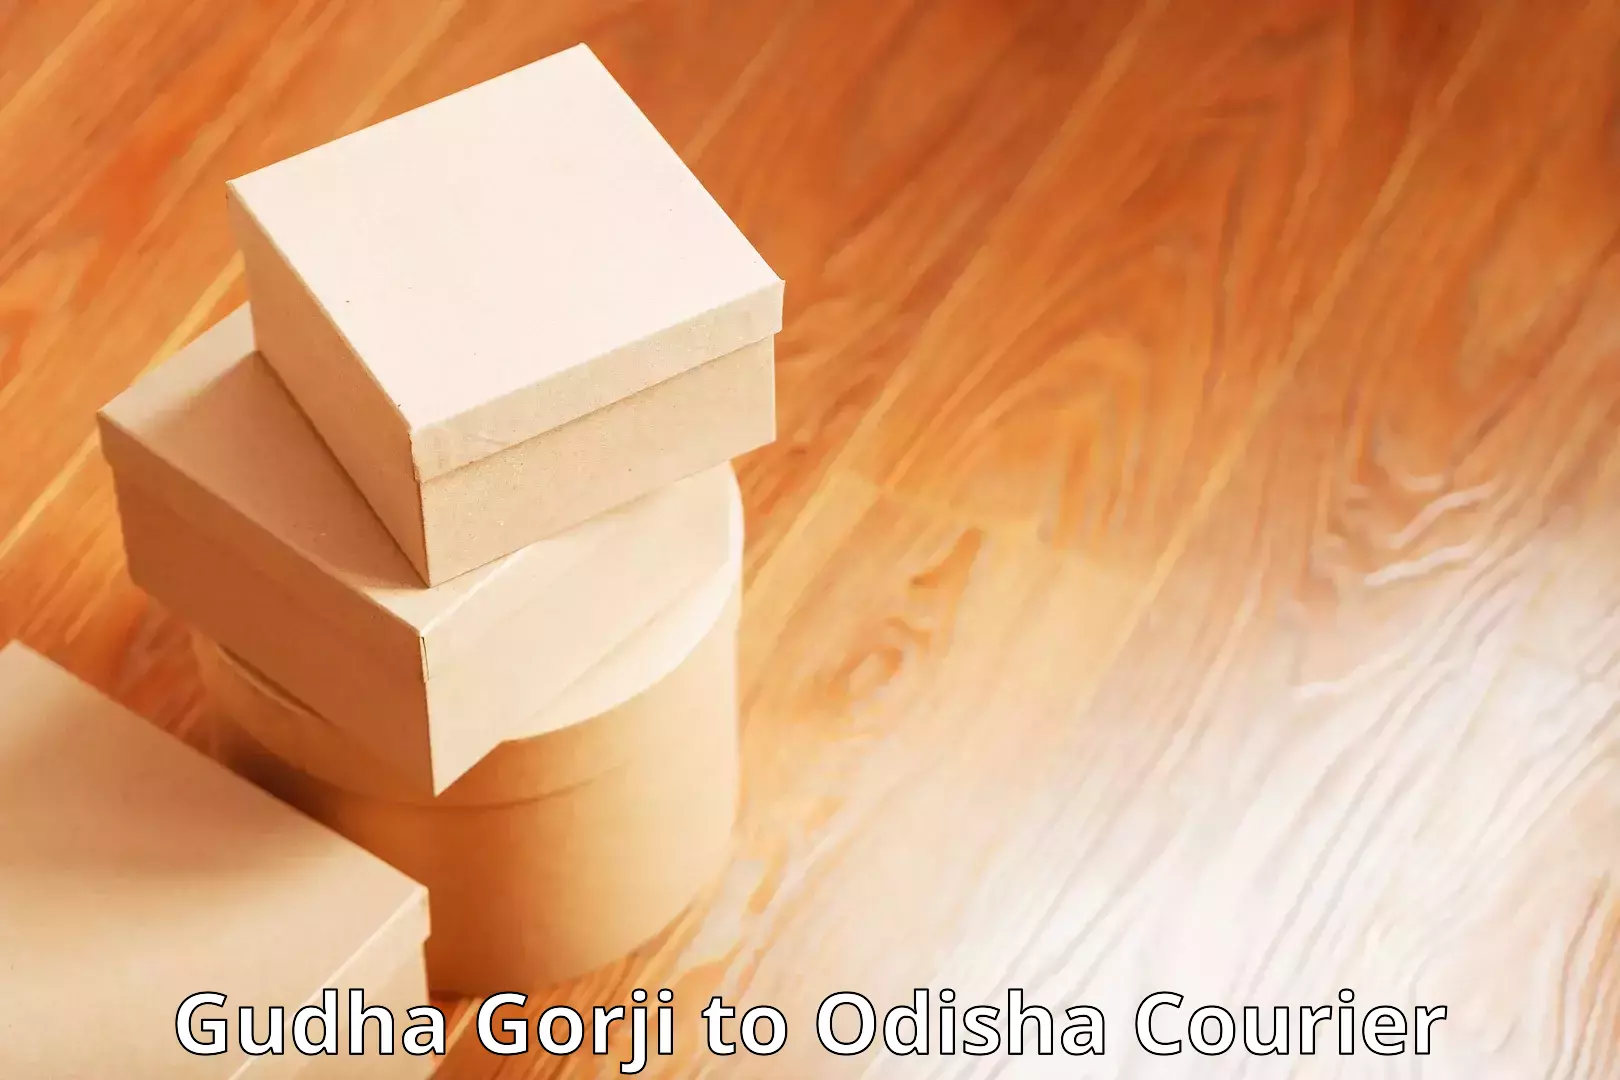 Nationwide shipping capabilities Gudha Gorji to Ukhunda